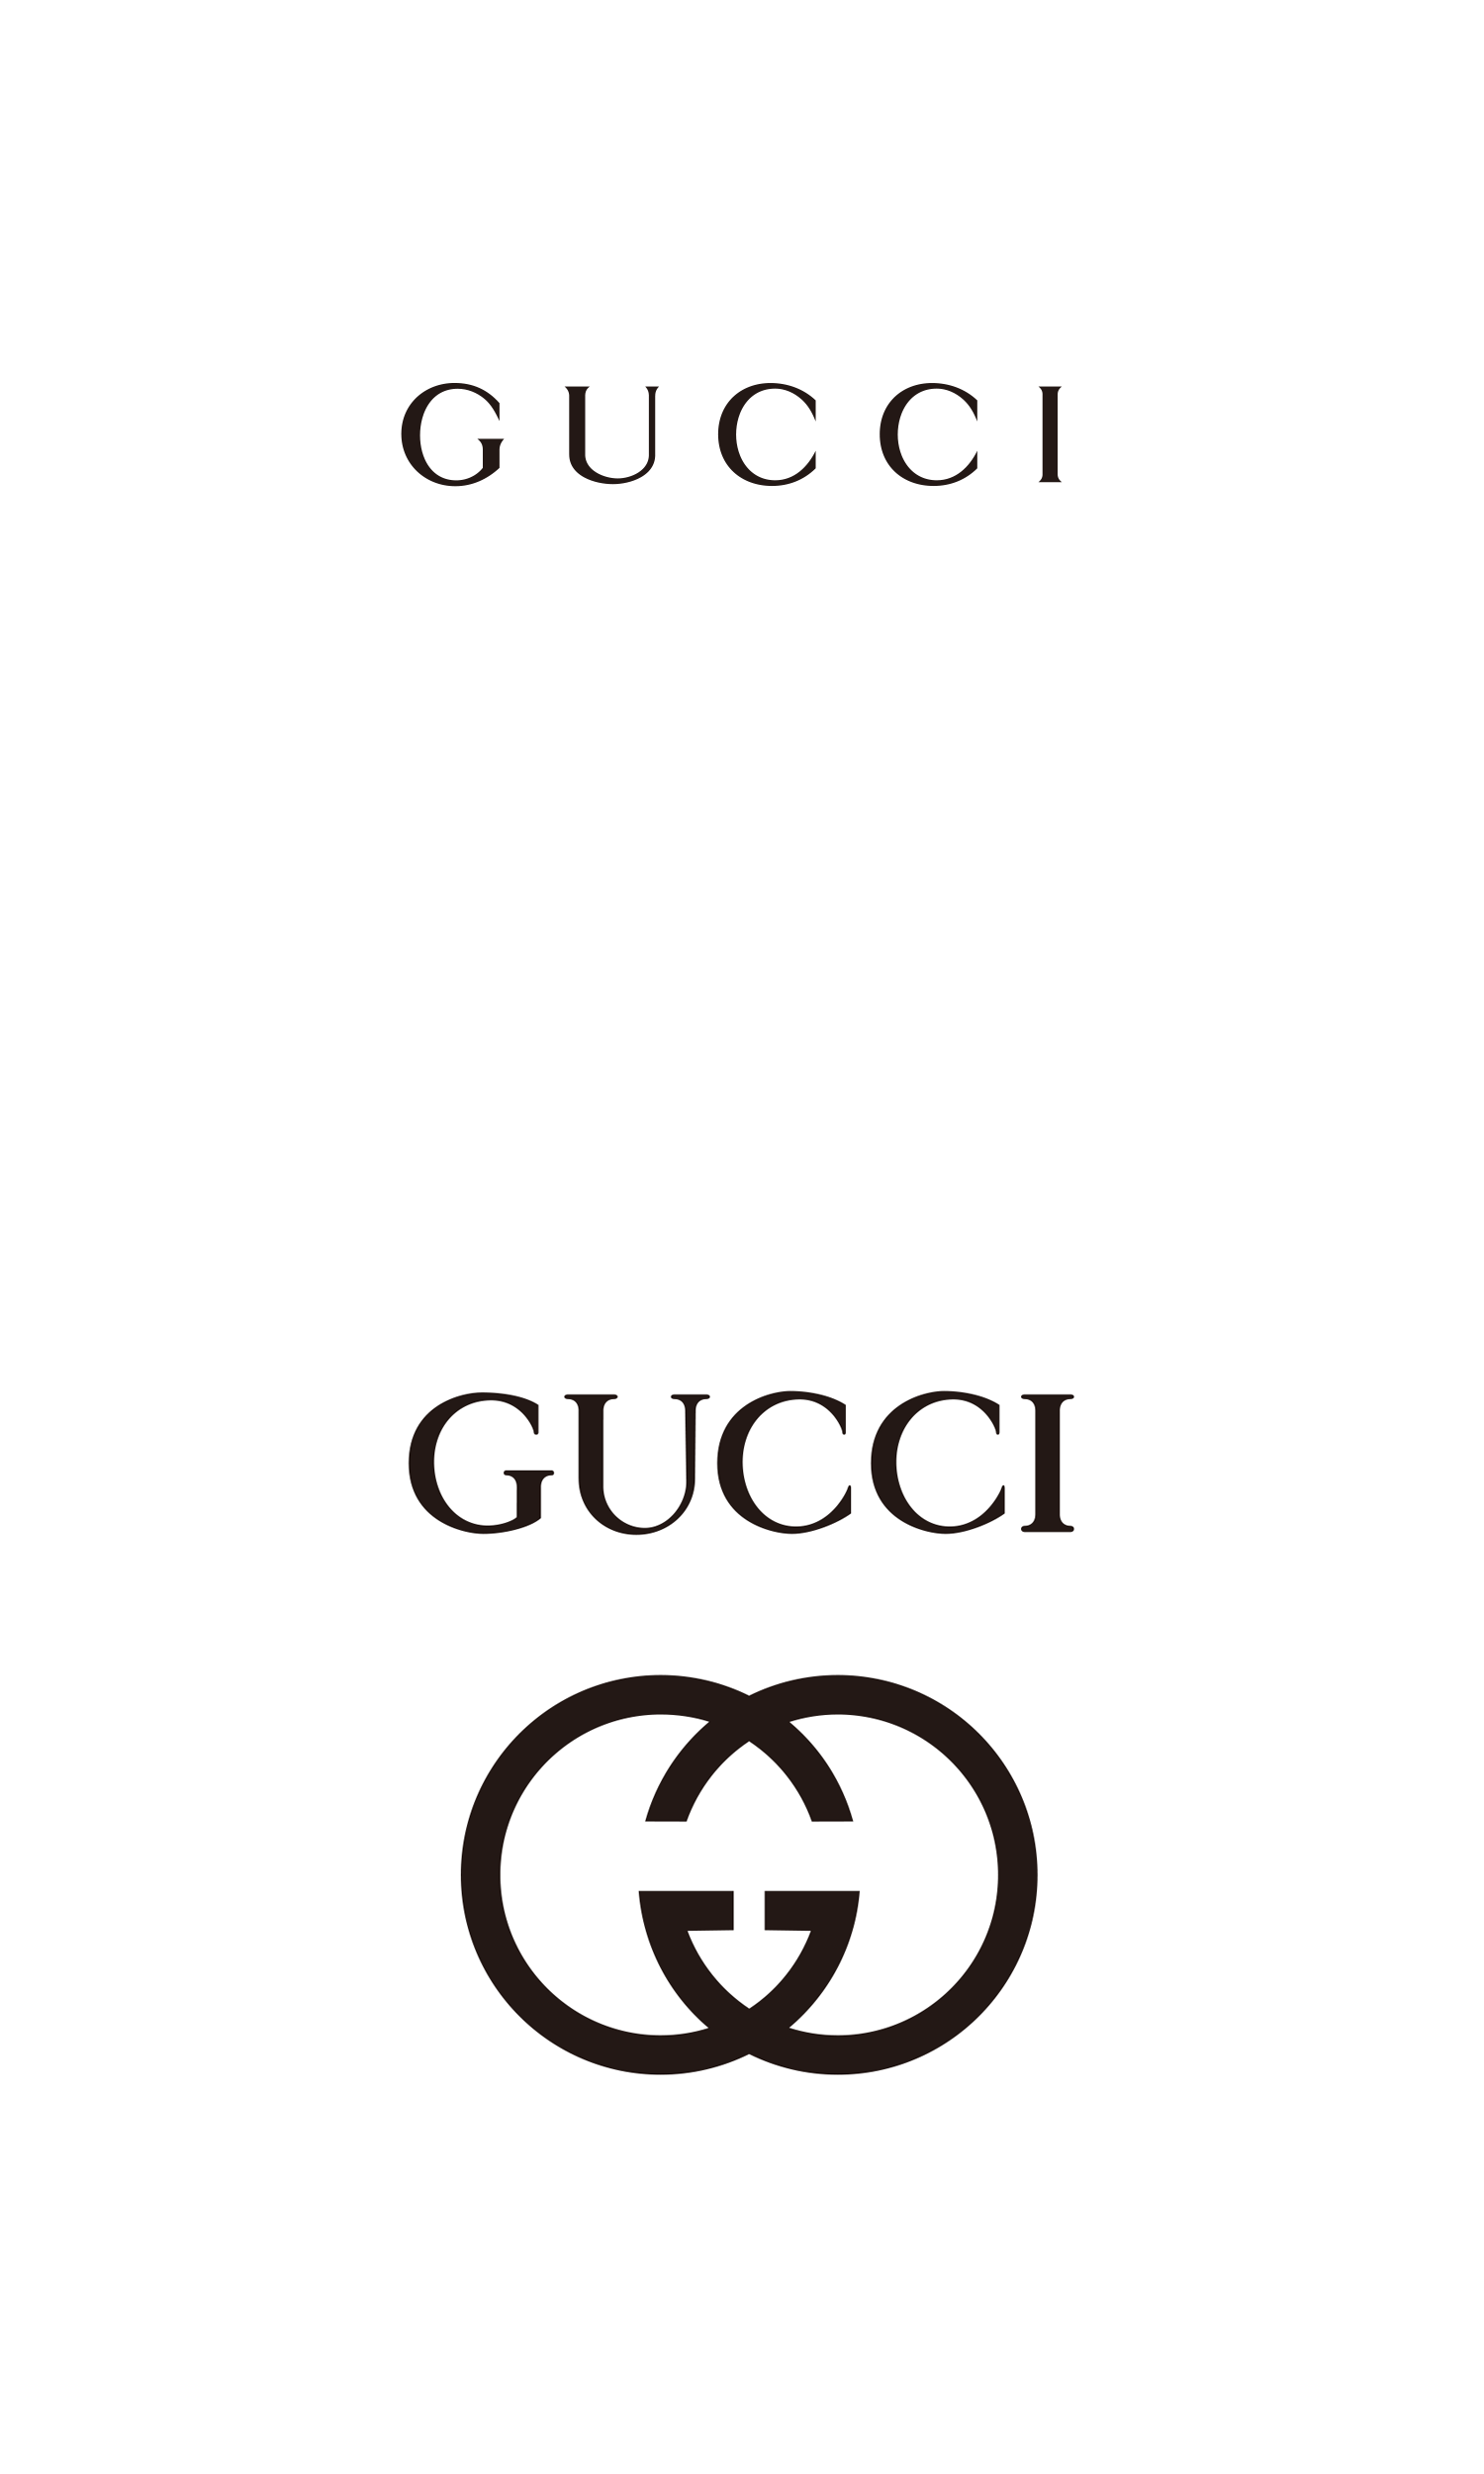 GUCCI古驰logo矢量标志素材下载